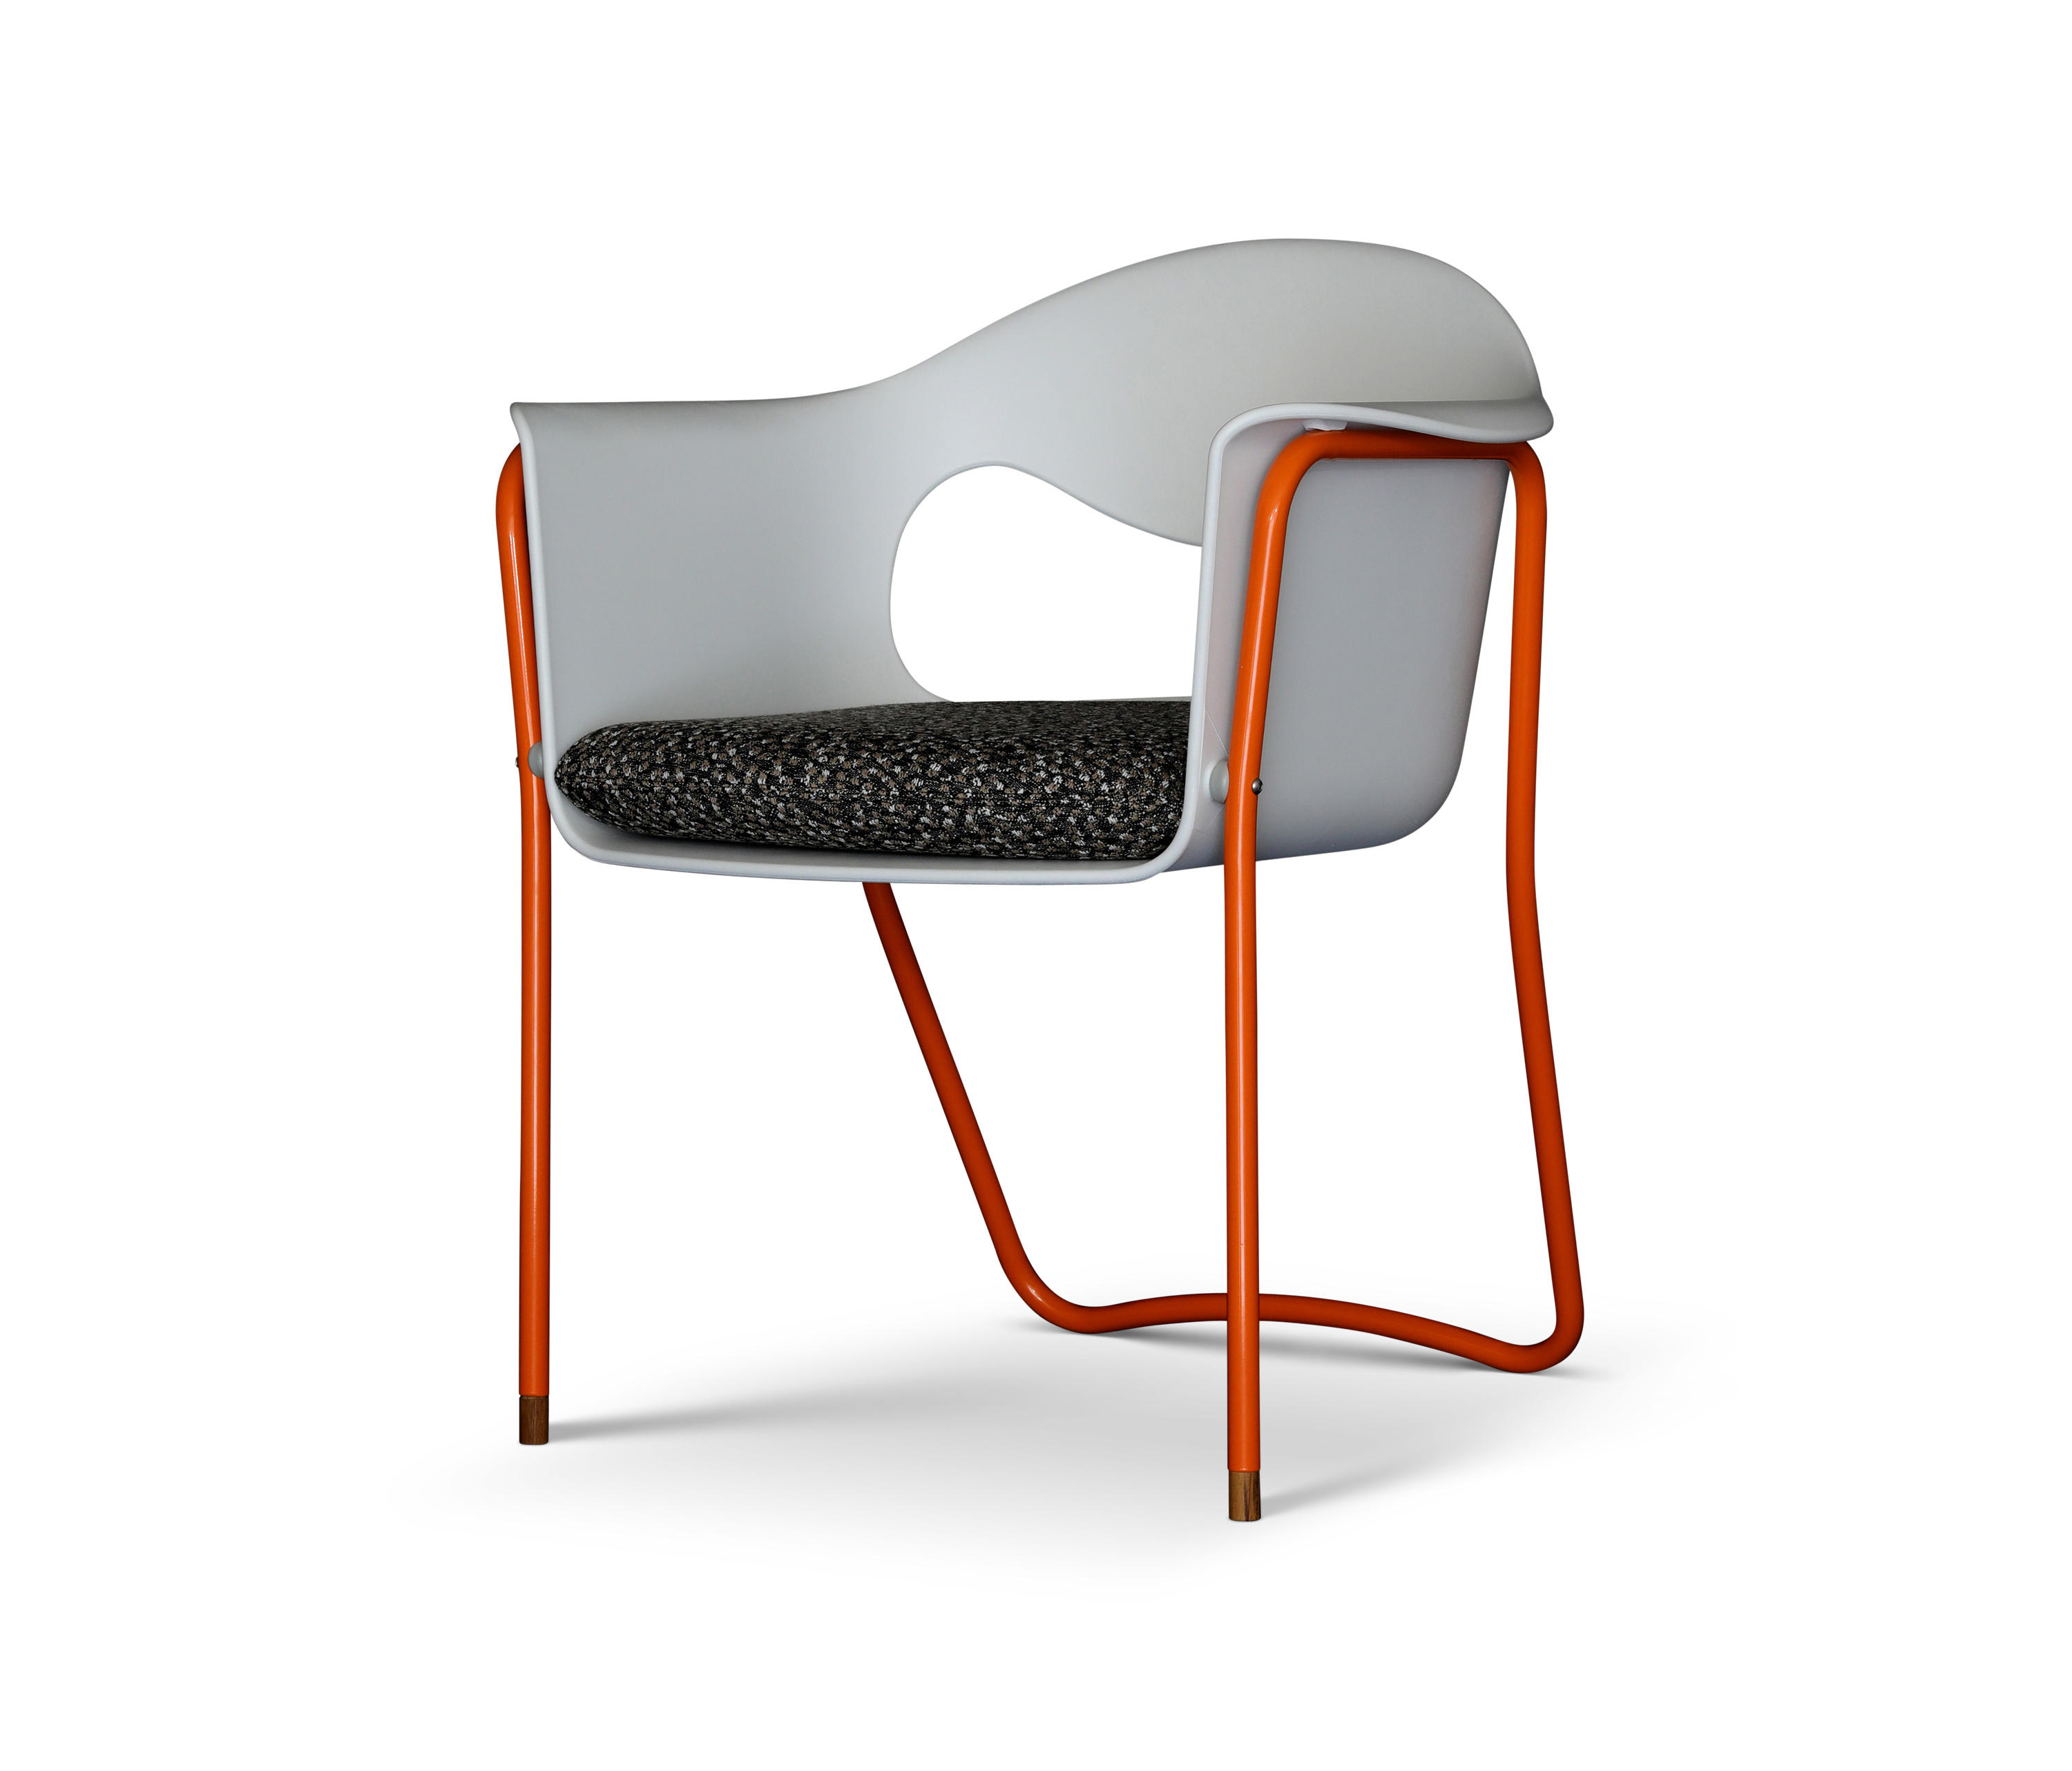 Modern Art Chair & mobili designer | Architonic